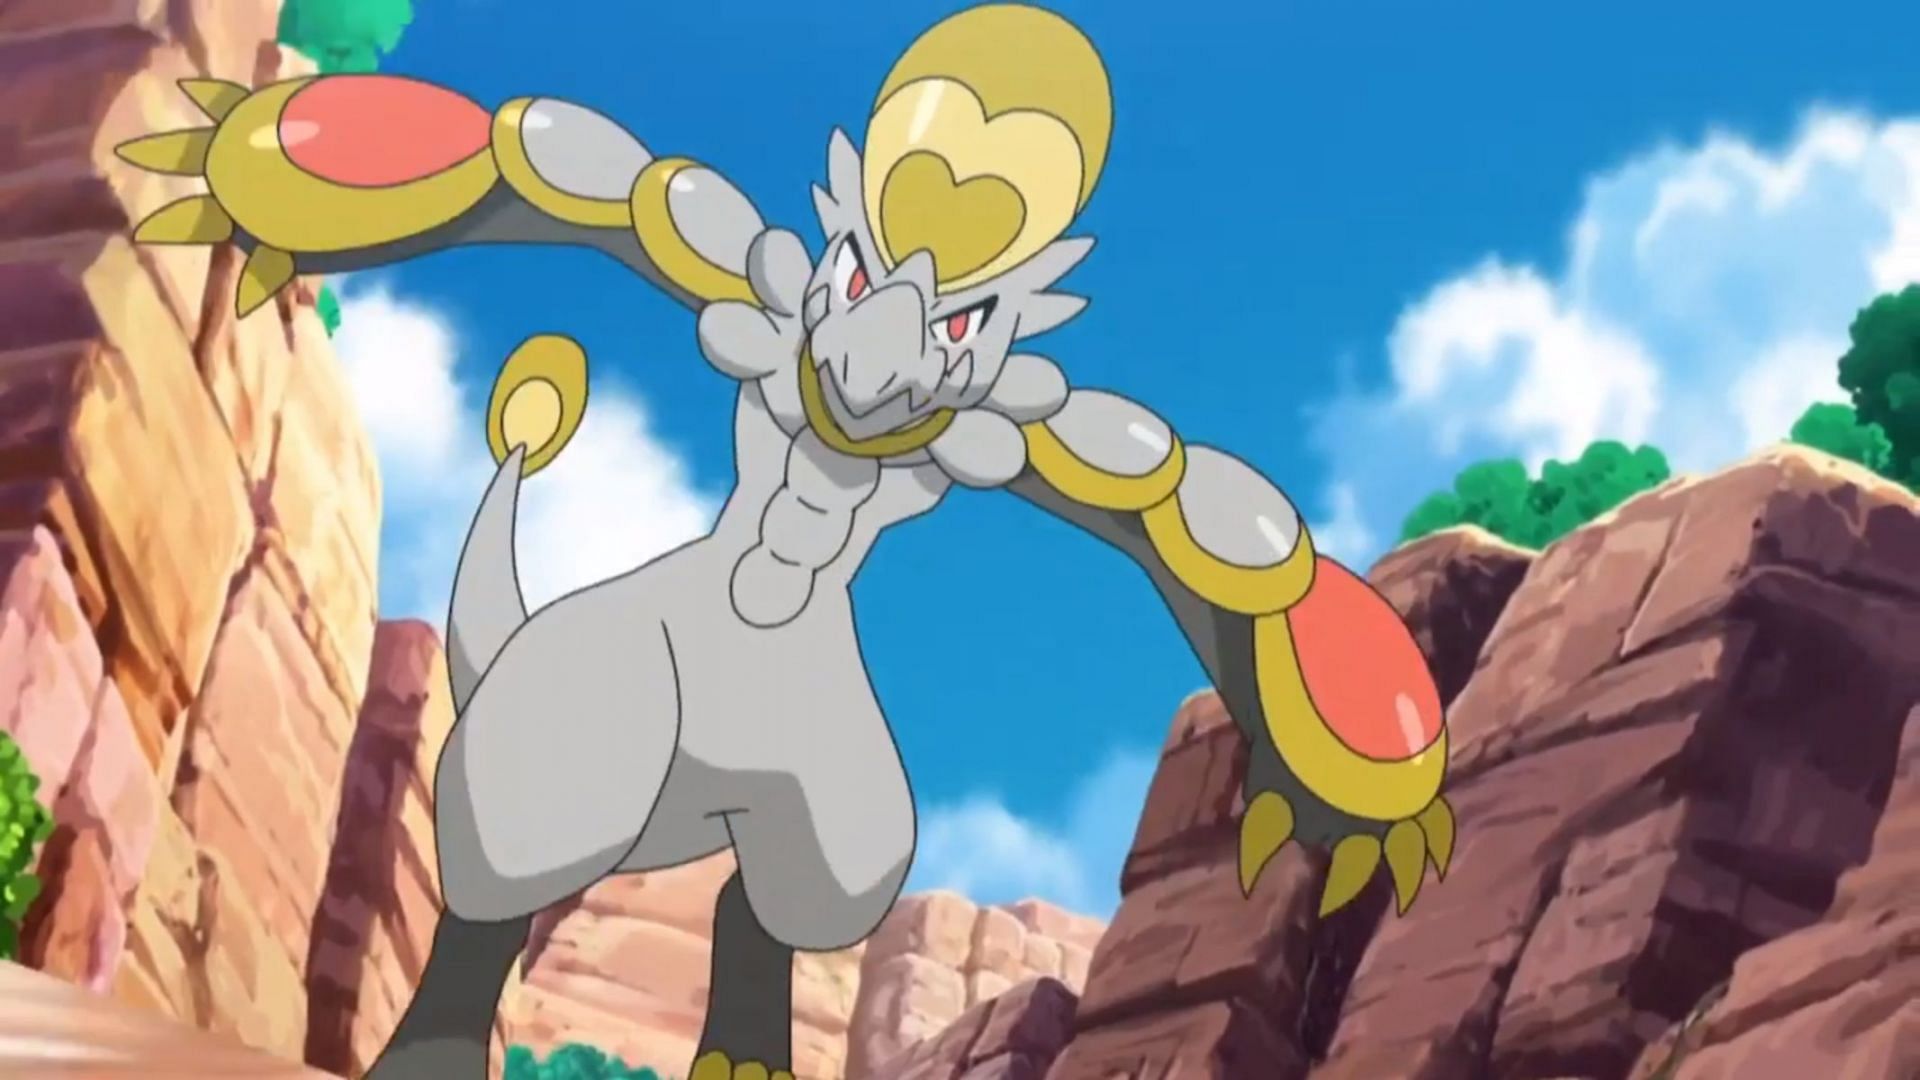 Hakamo-o as it appears in the Pokemon anime (Image via The Pokemon Company)